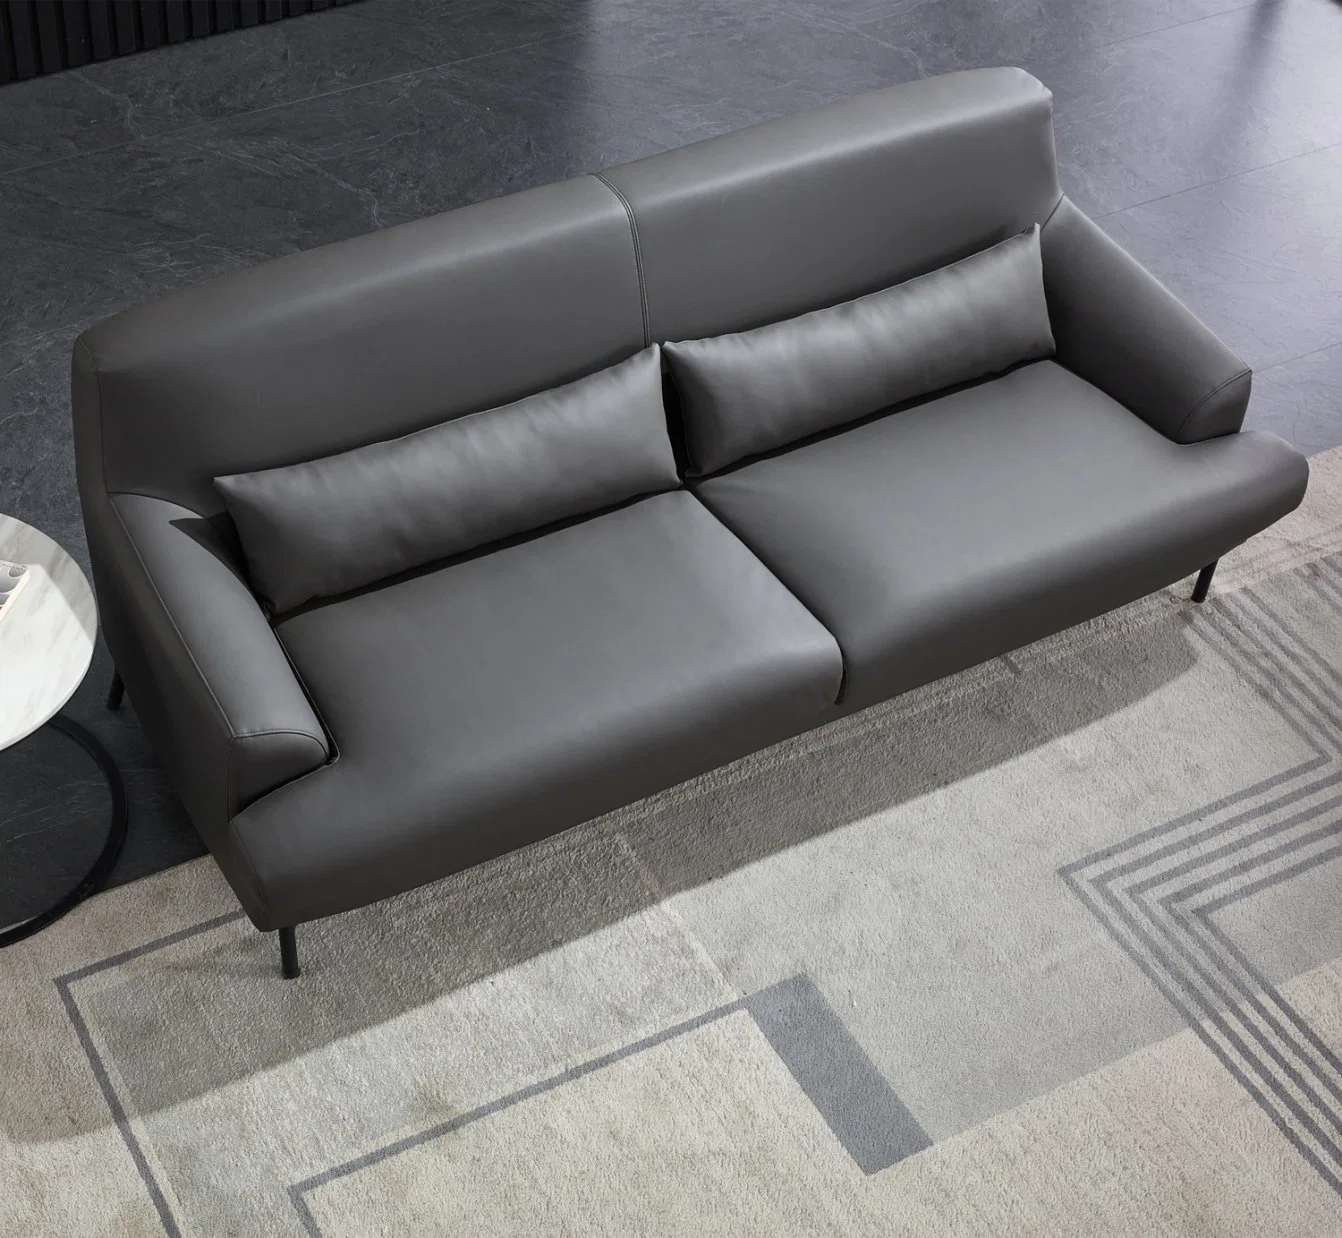 Zode Modern Home/Жилая комната/Офисная мебель кушетка Sofa Mf106 PU Leather/ Диван с обивкой из ткани